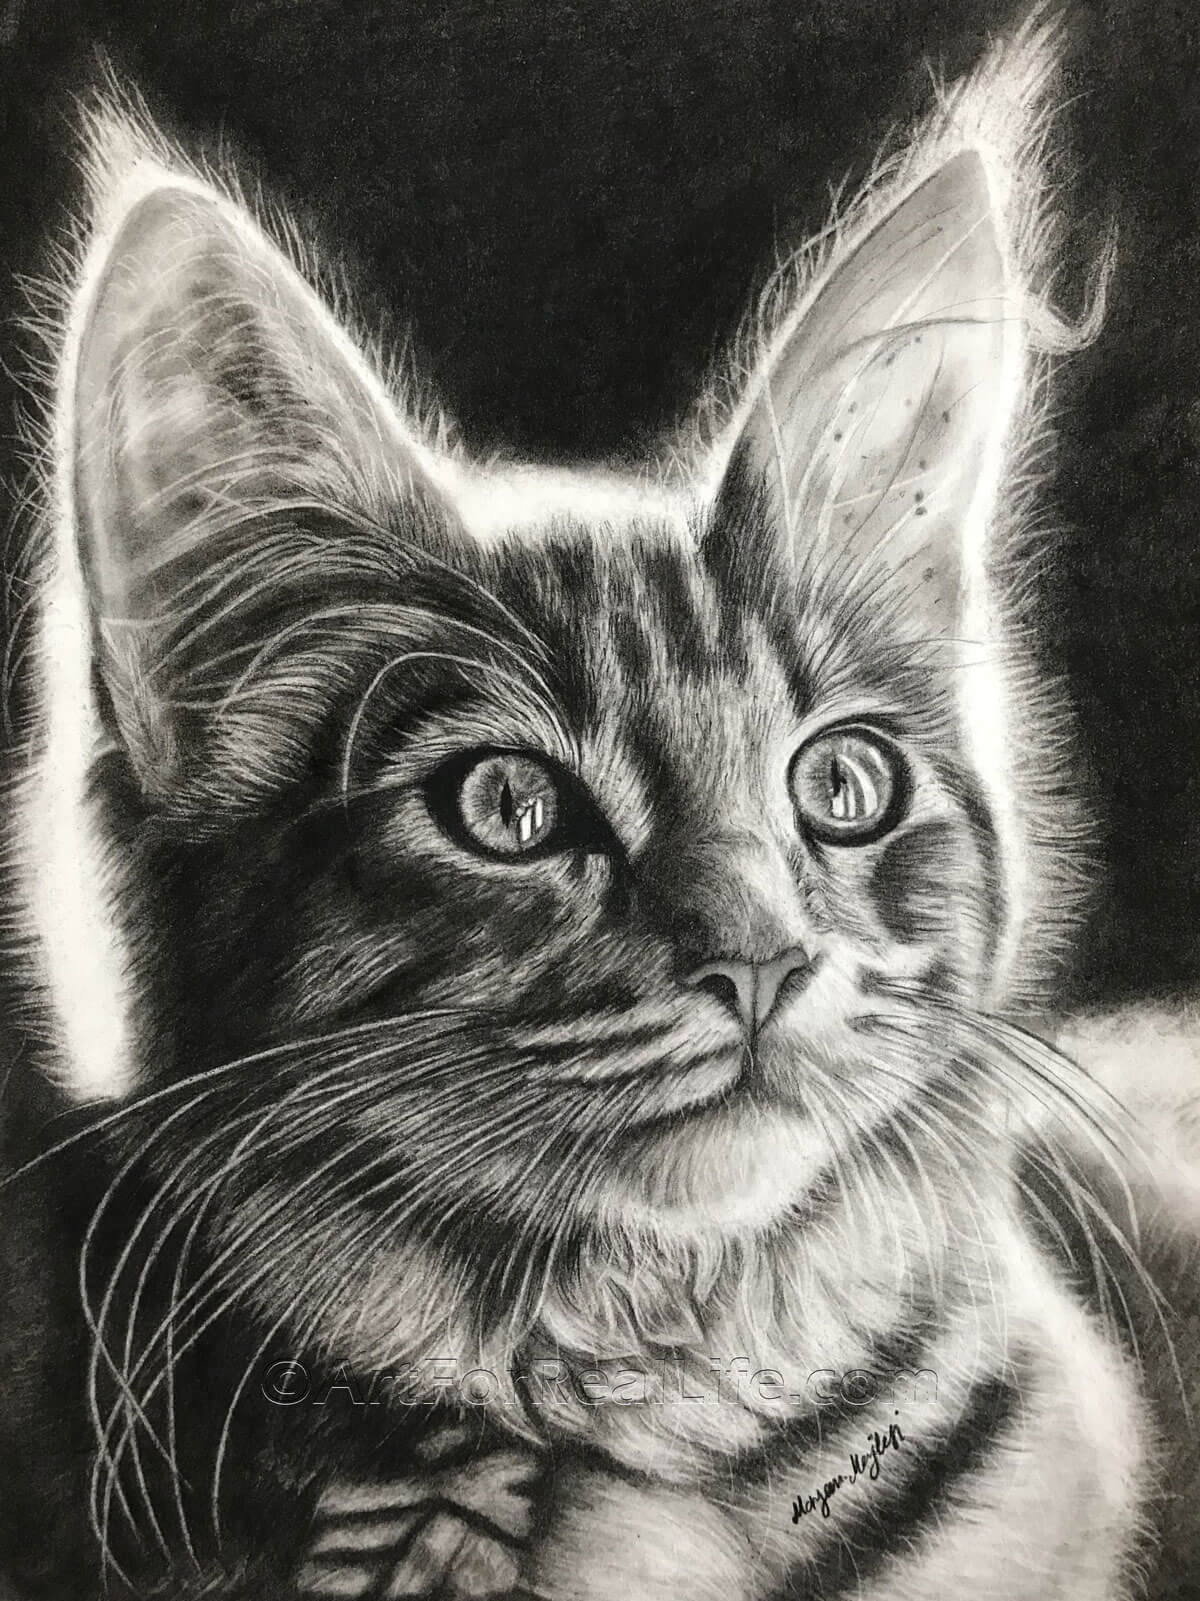 Mysterious Cat- Print - ArtForRealLife Store